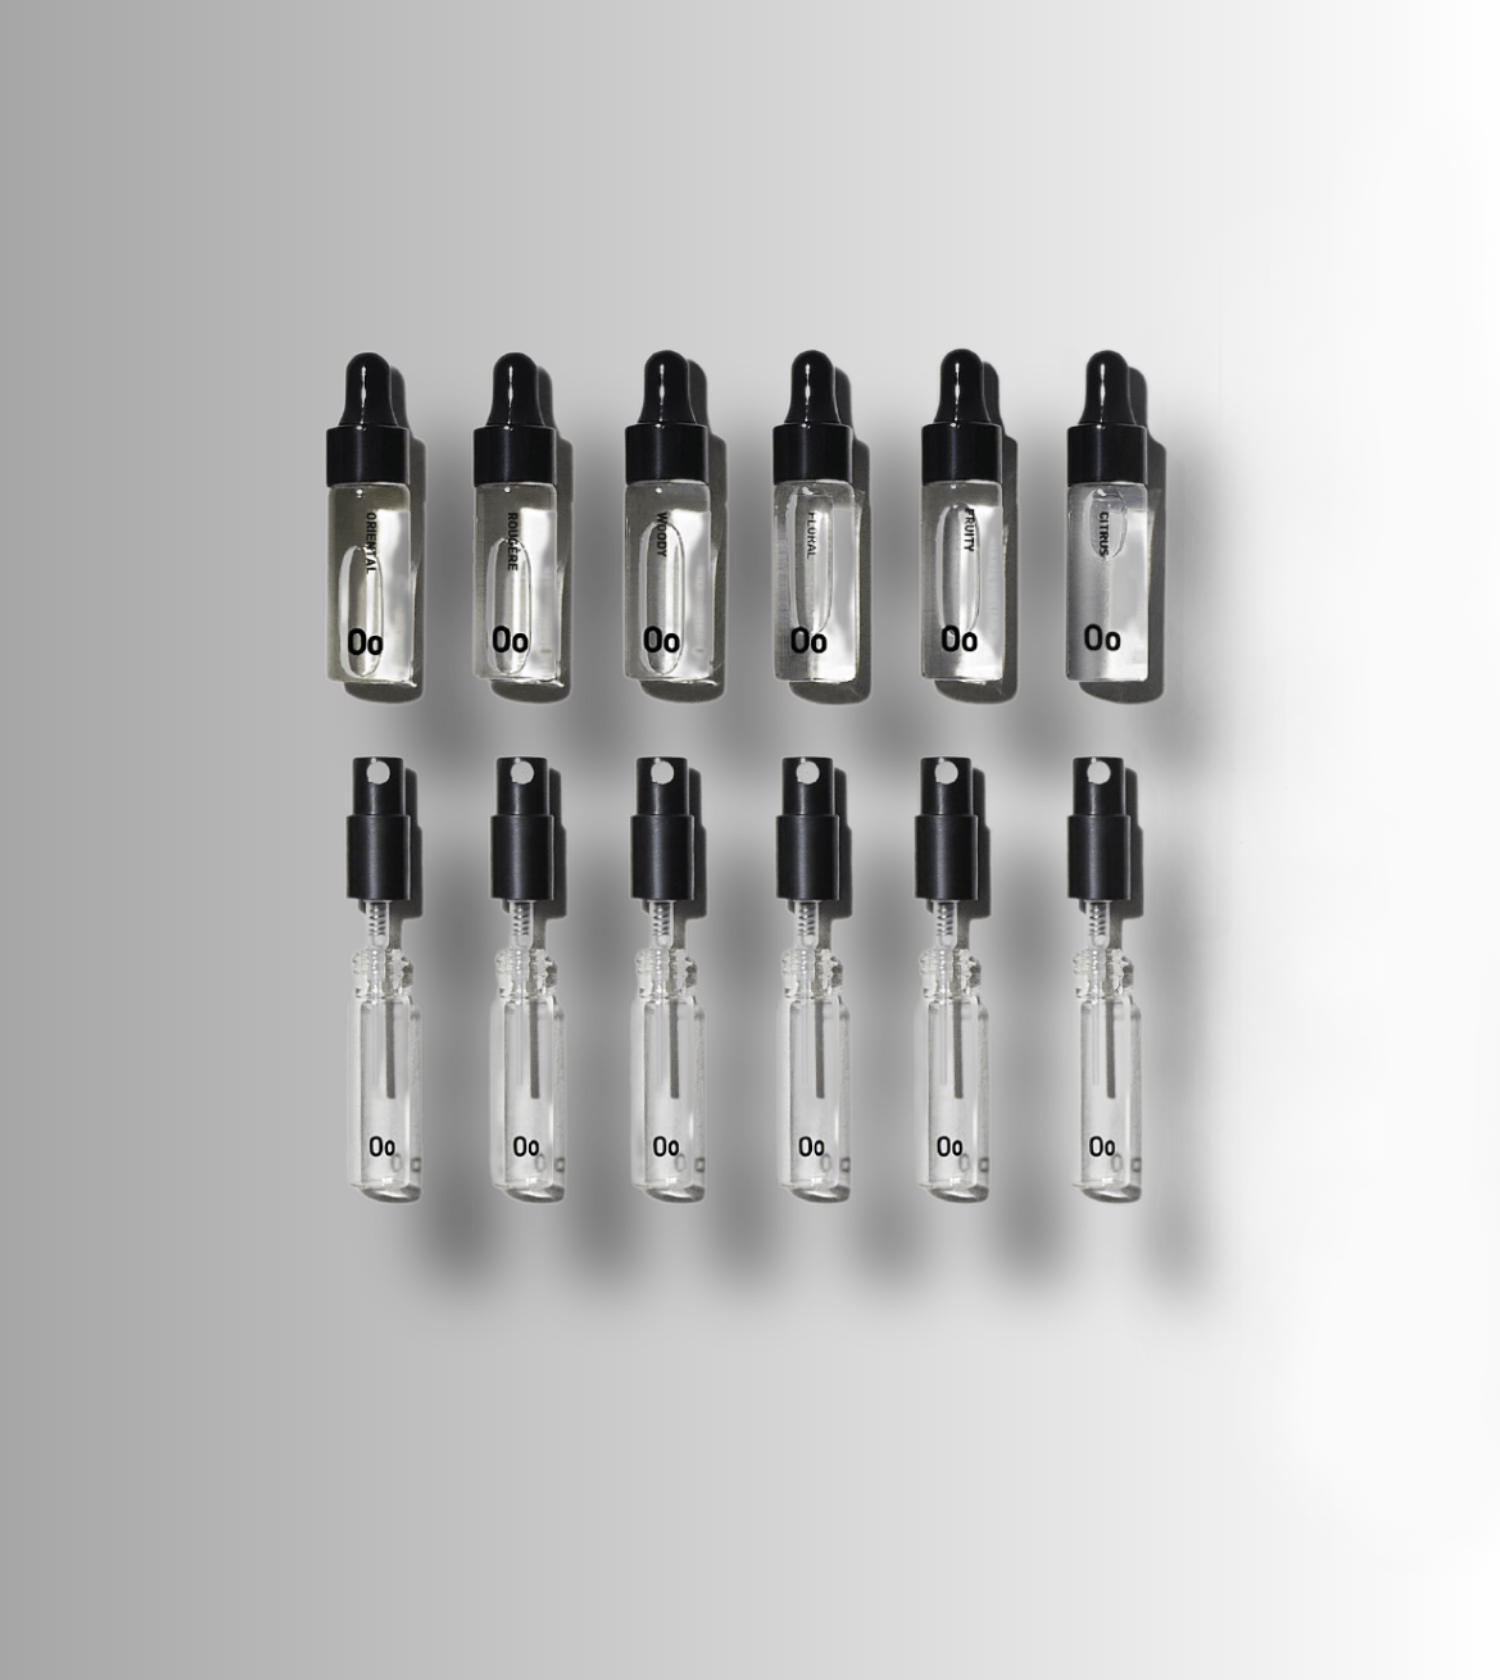 Fresh Perfume Mixology Kit - Oo La Lab